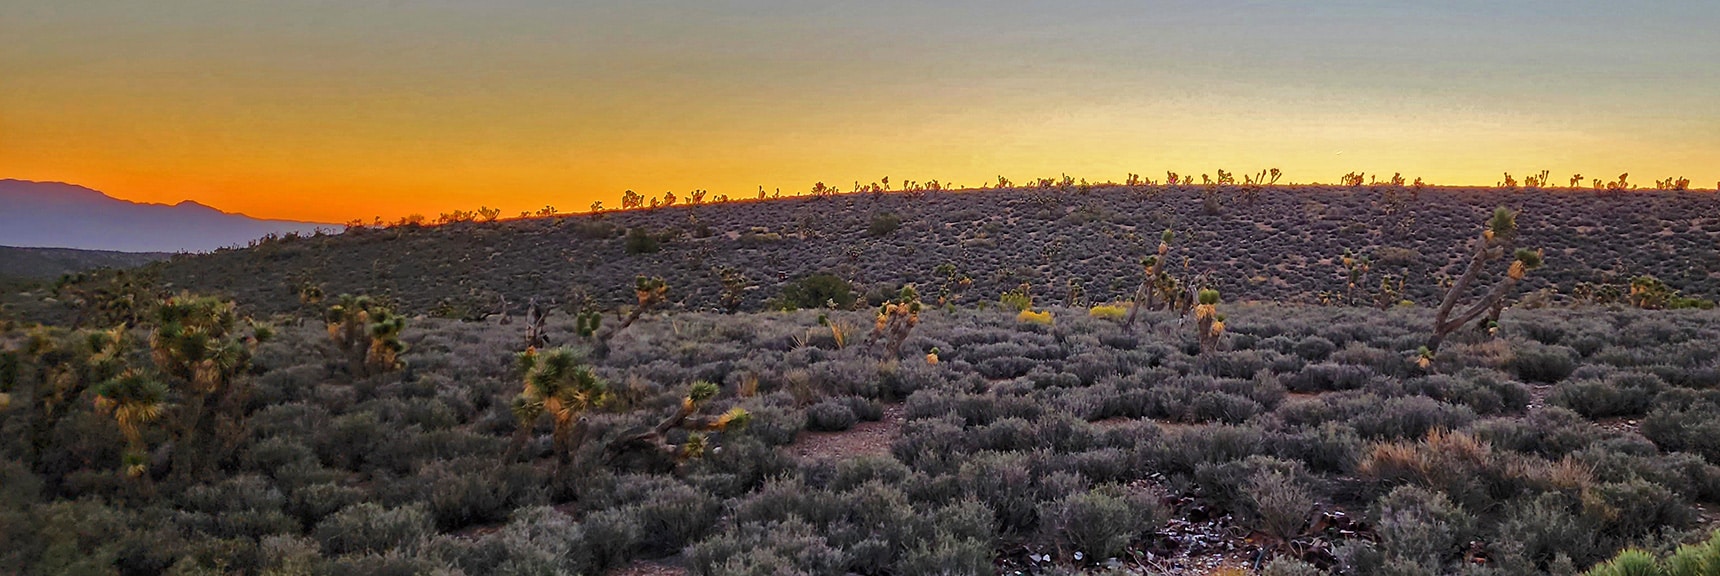 Joshua Tree Ridgeline Silhouette Toward Sheep Range | Kyle Canyon Grand Crossing | Northern Half | La Madre Mountains Wilderness, Nevada